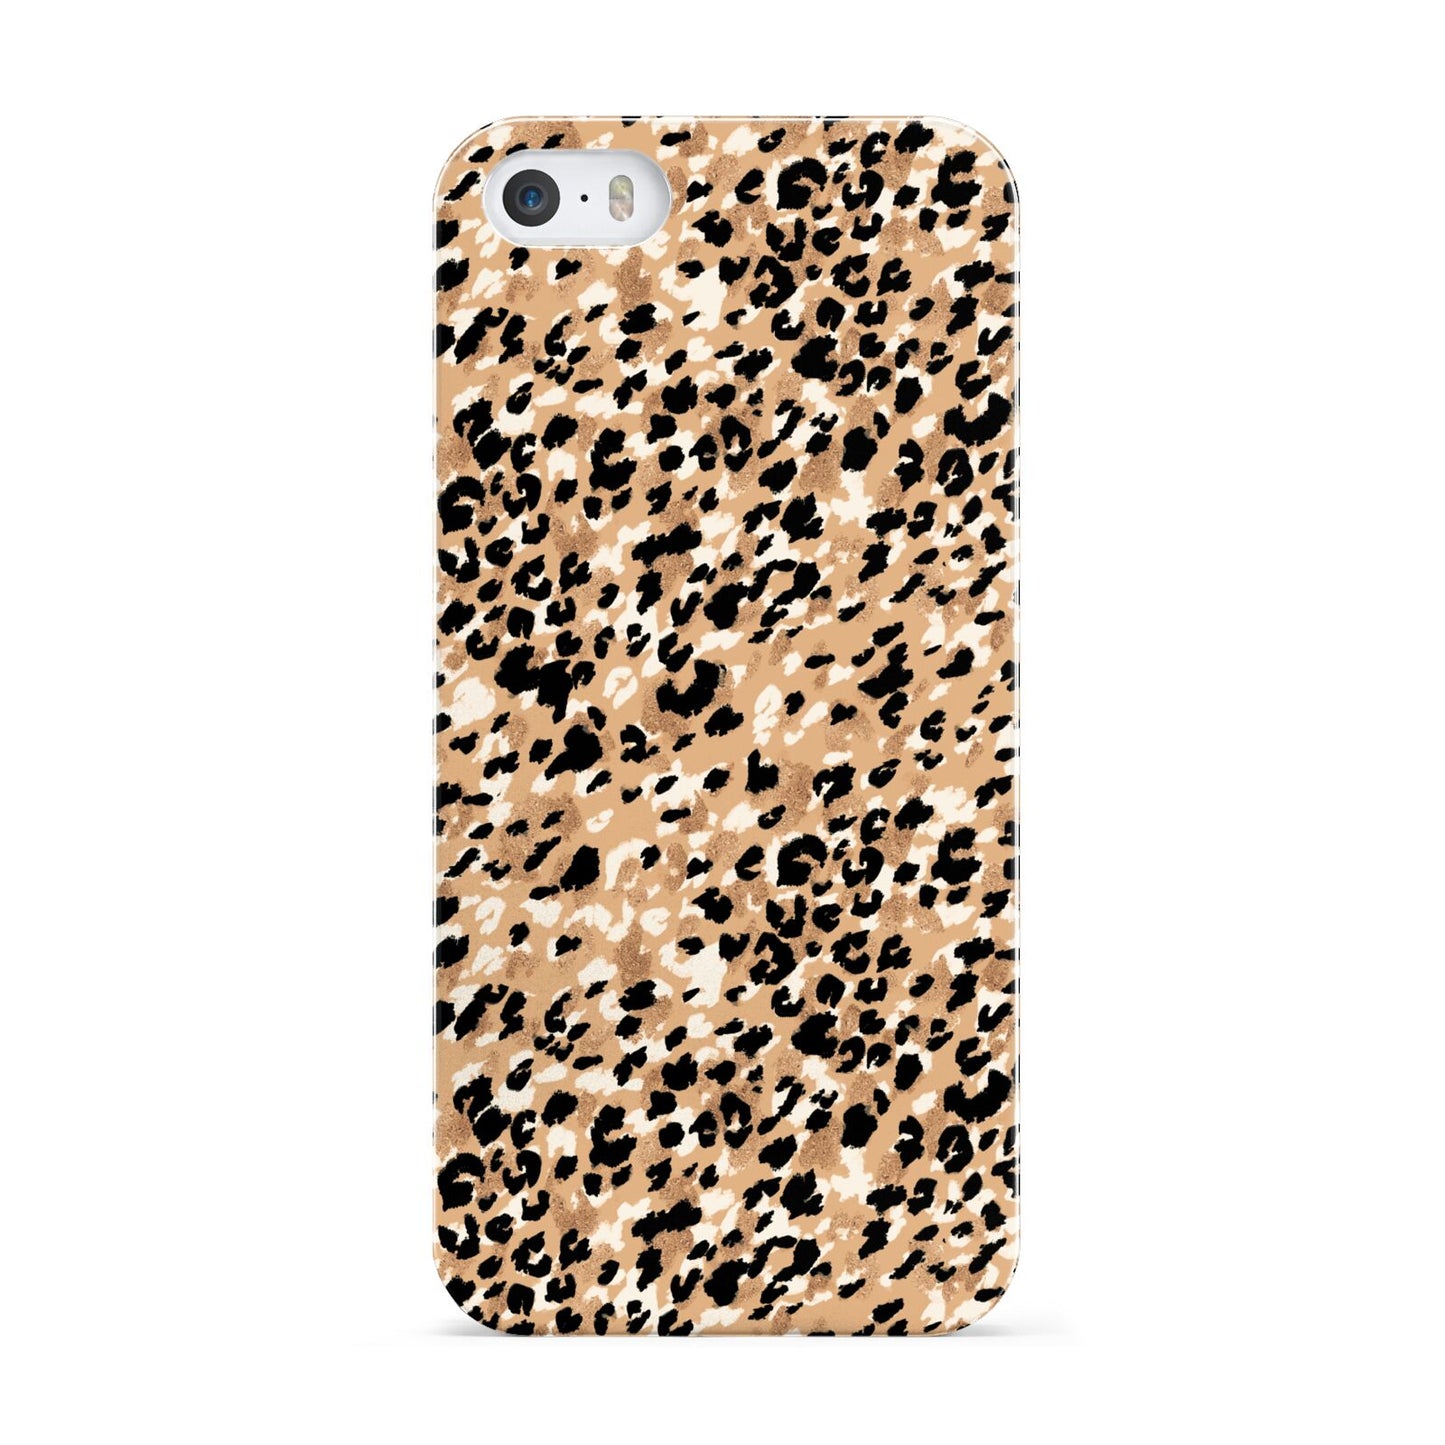 Leopard Print Apple iPhone 5 Case